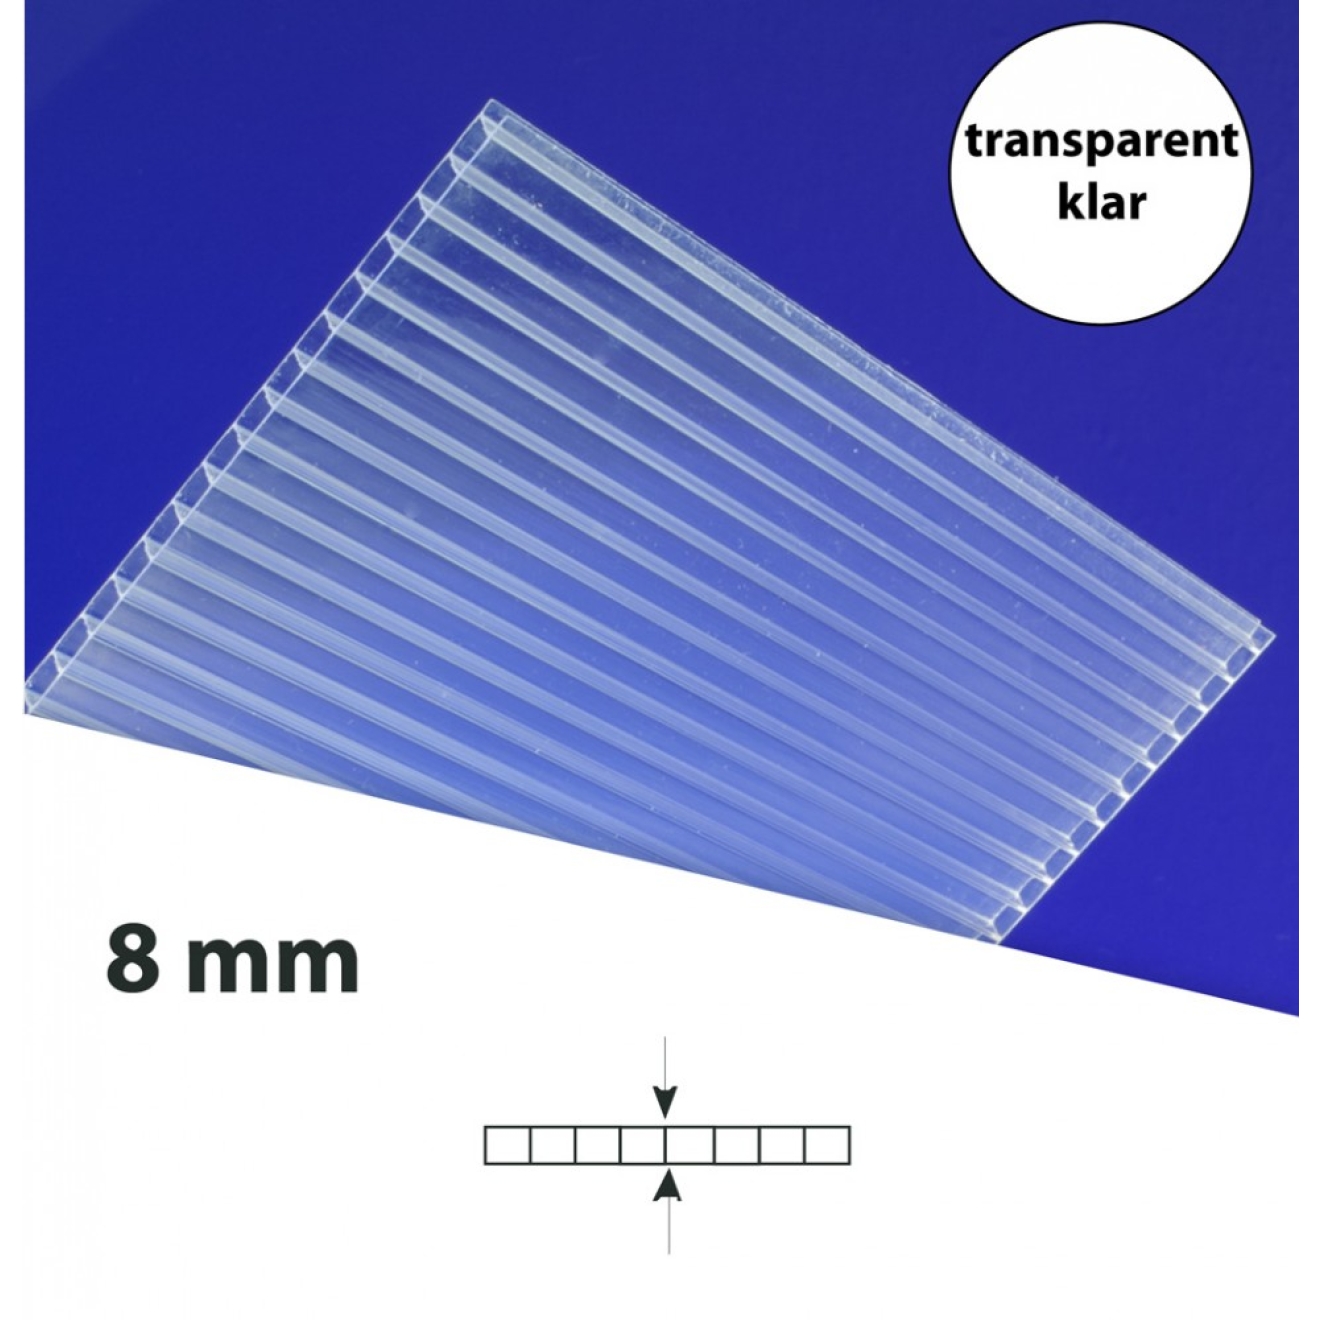 Stegplatten 8 mm transparent klar - 2100 mm breit